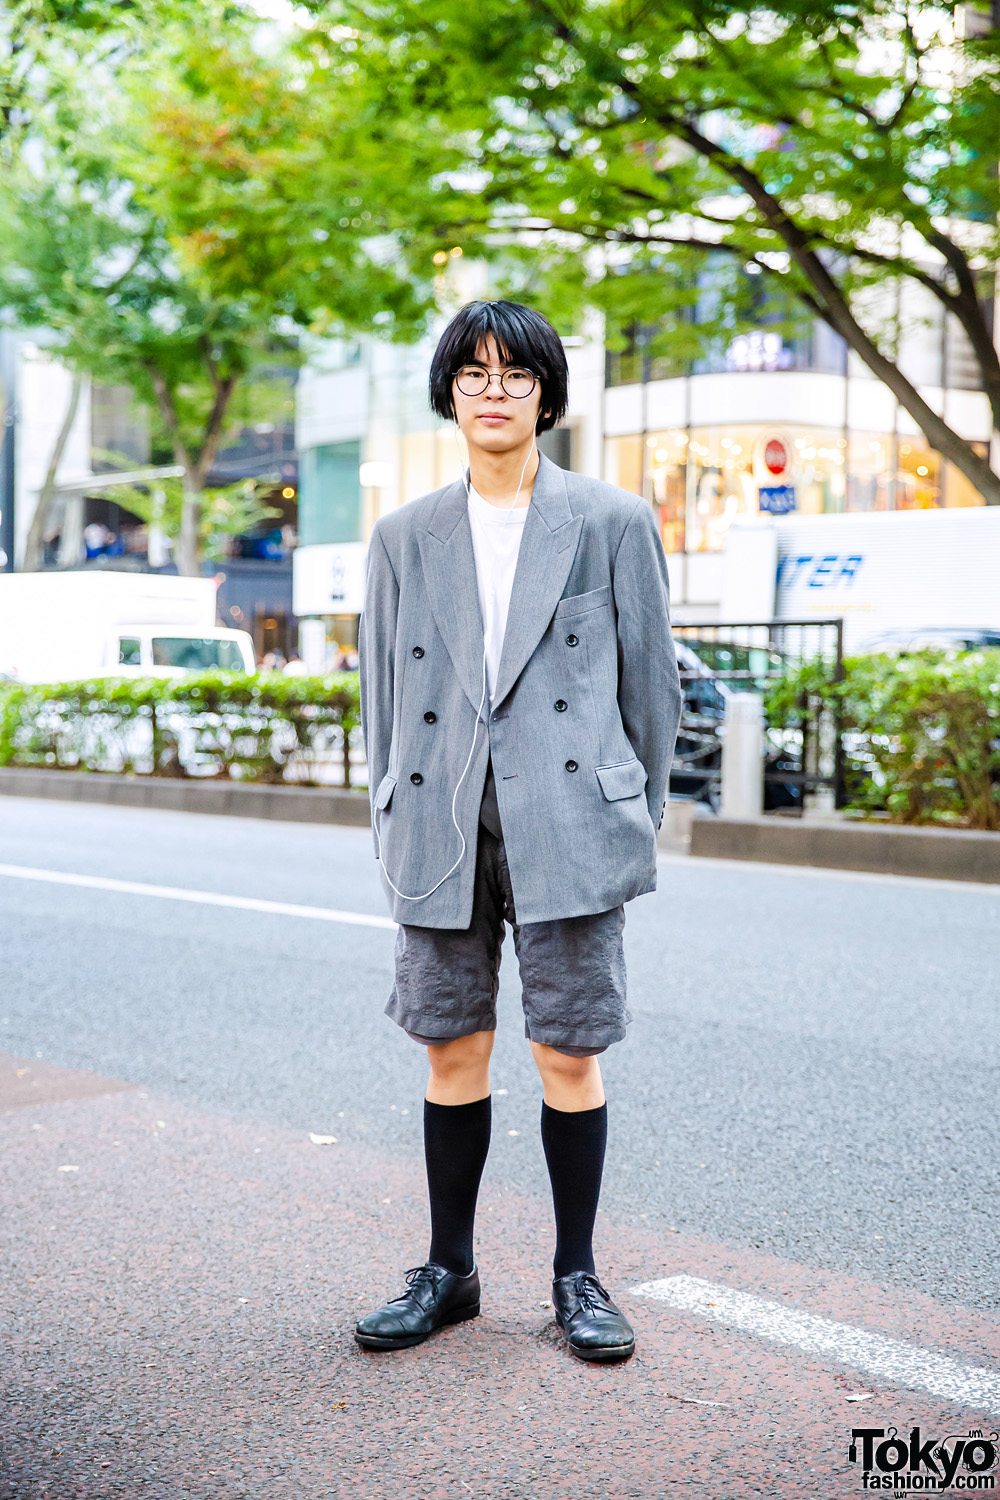 Harajuku Menswear Street Style w/ Round Glasses, Kenzo Double-Breasted Jacket, Junya Watanabe Bermuda Shorts, Knee High Socks, Porter & United Arrows